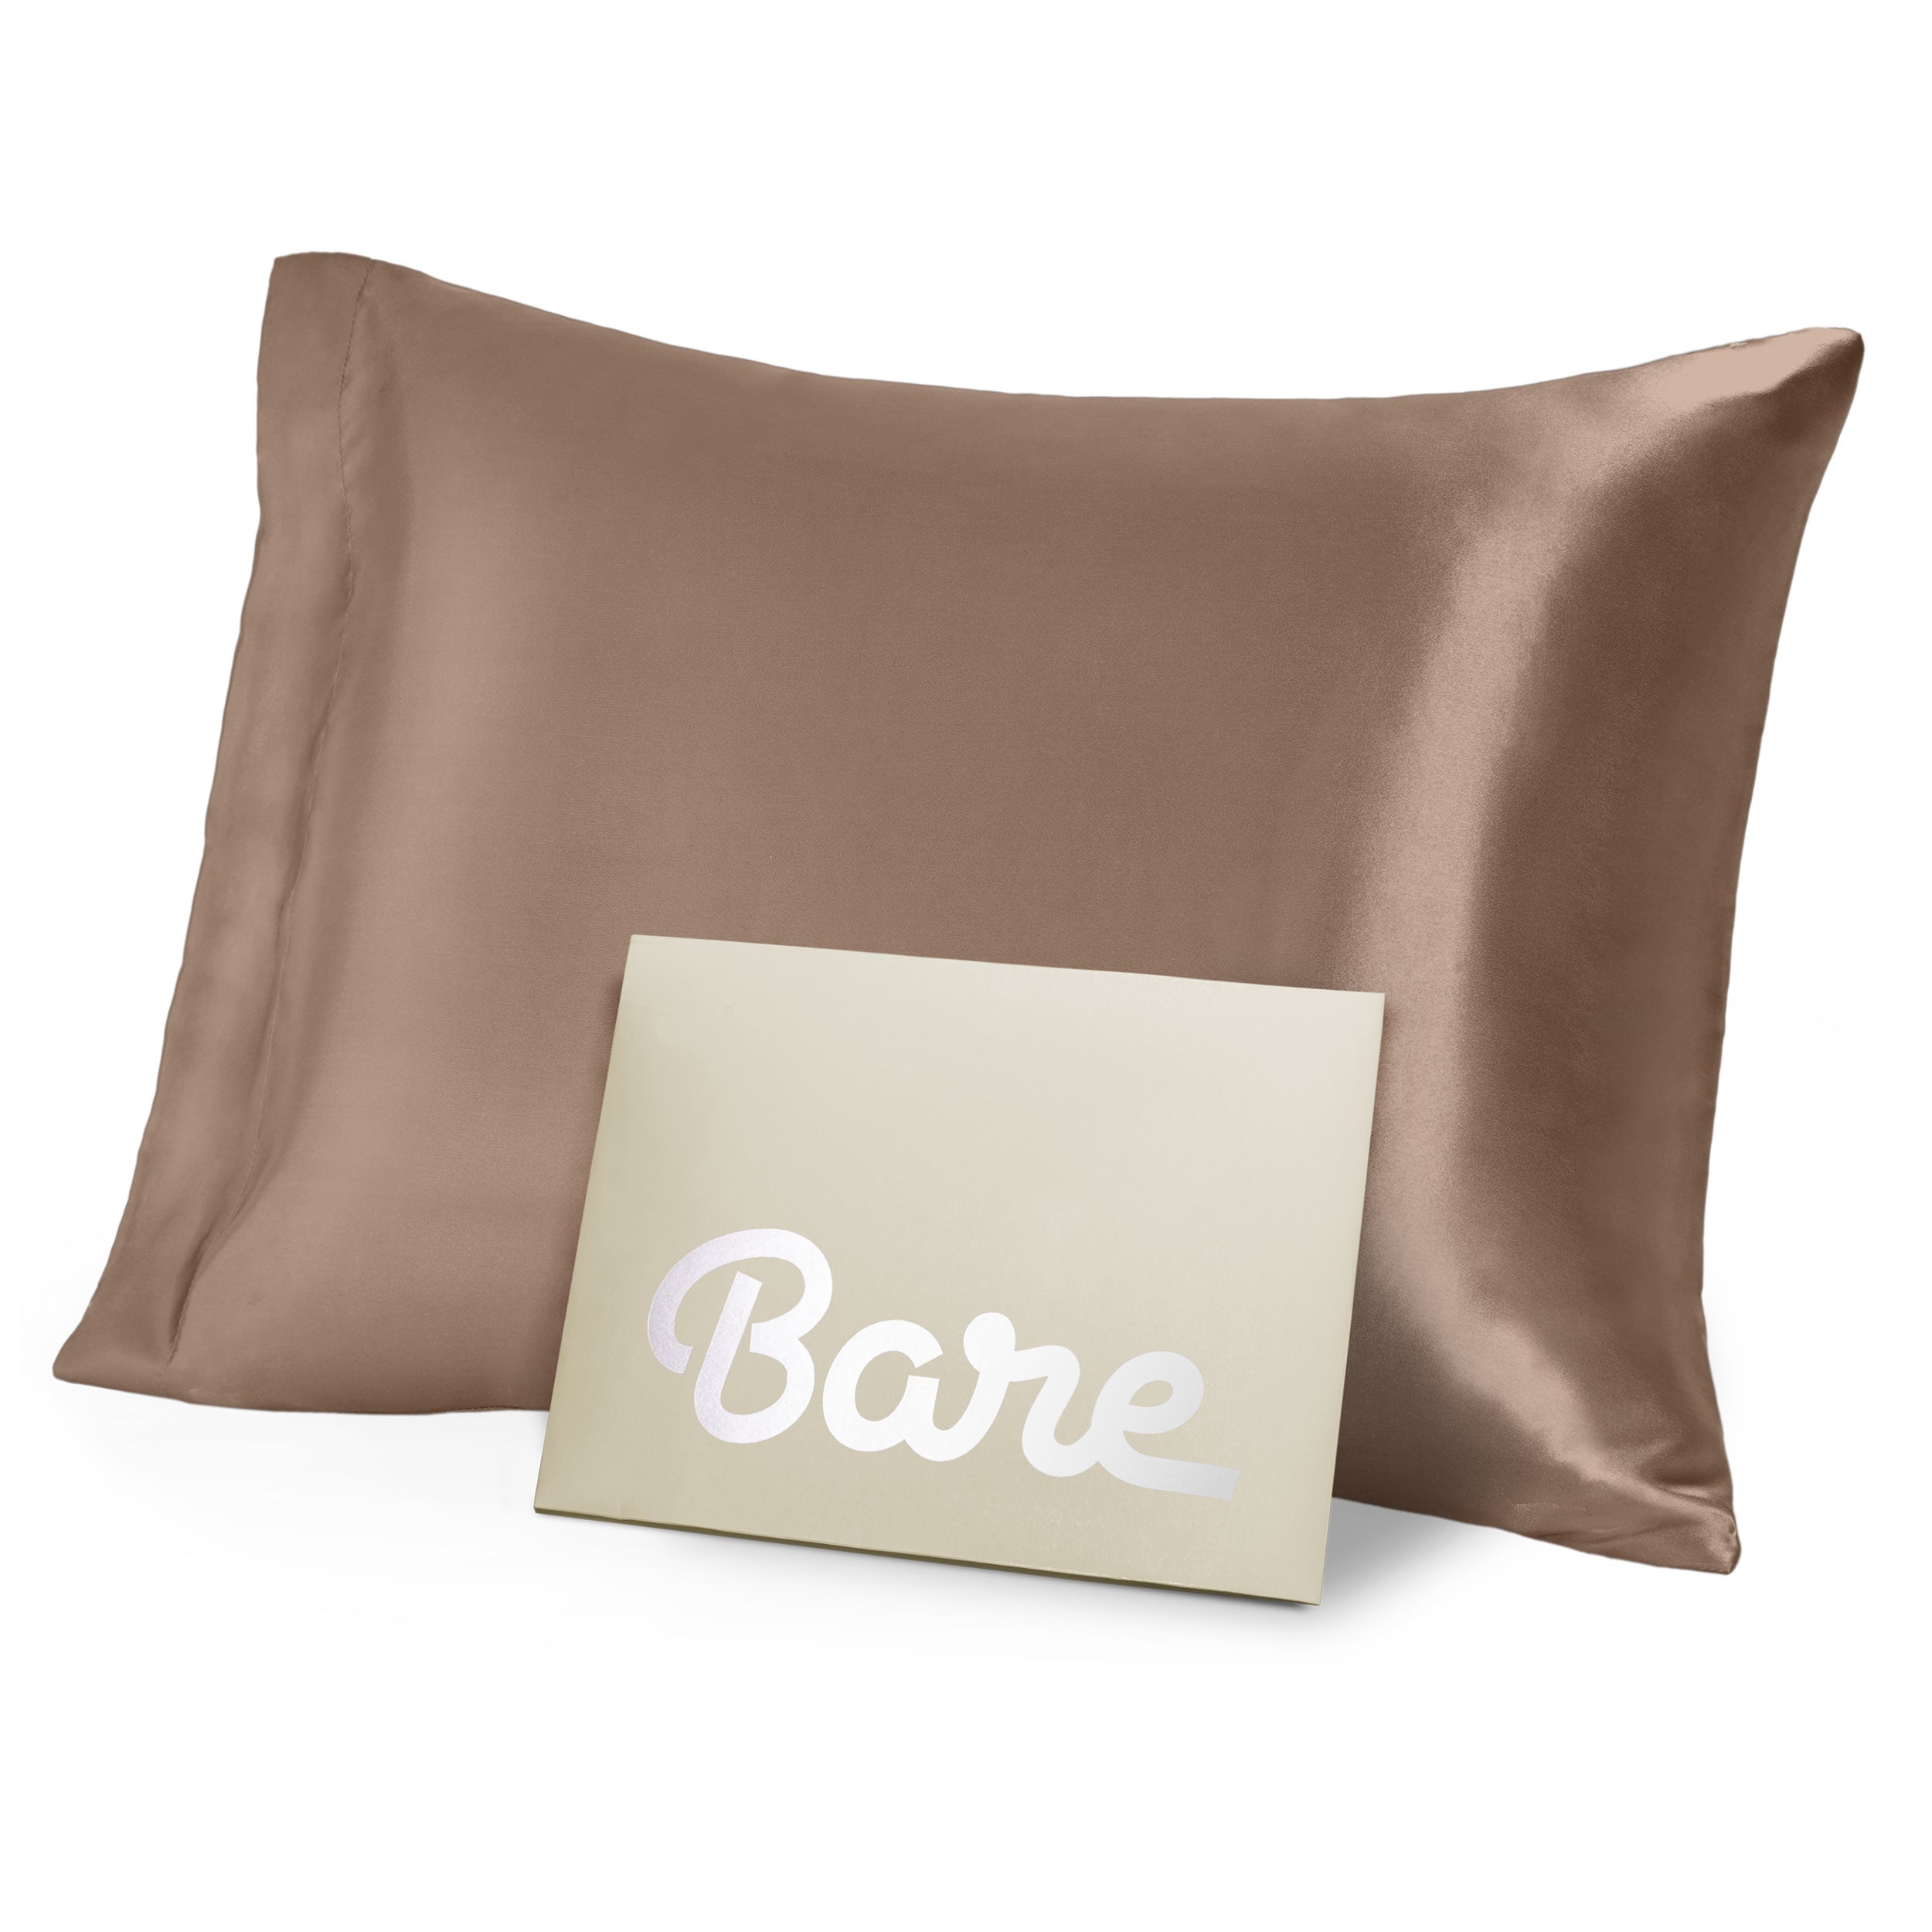 A brown mulberry silk pillowcase on a pillow